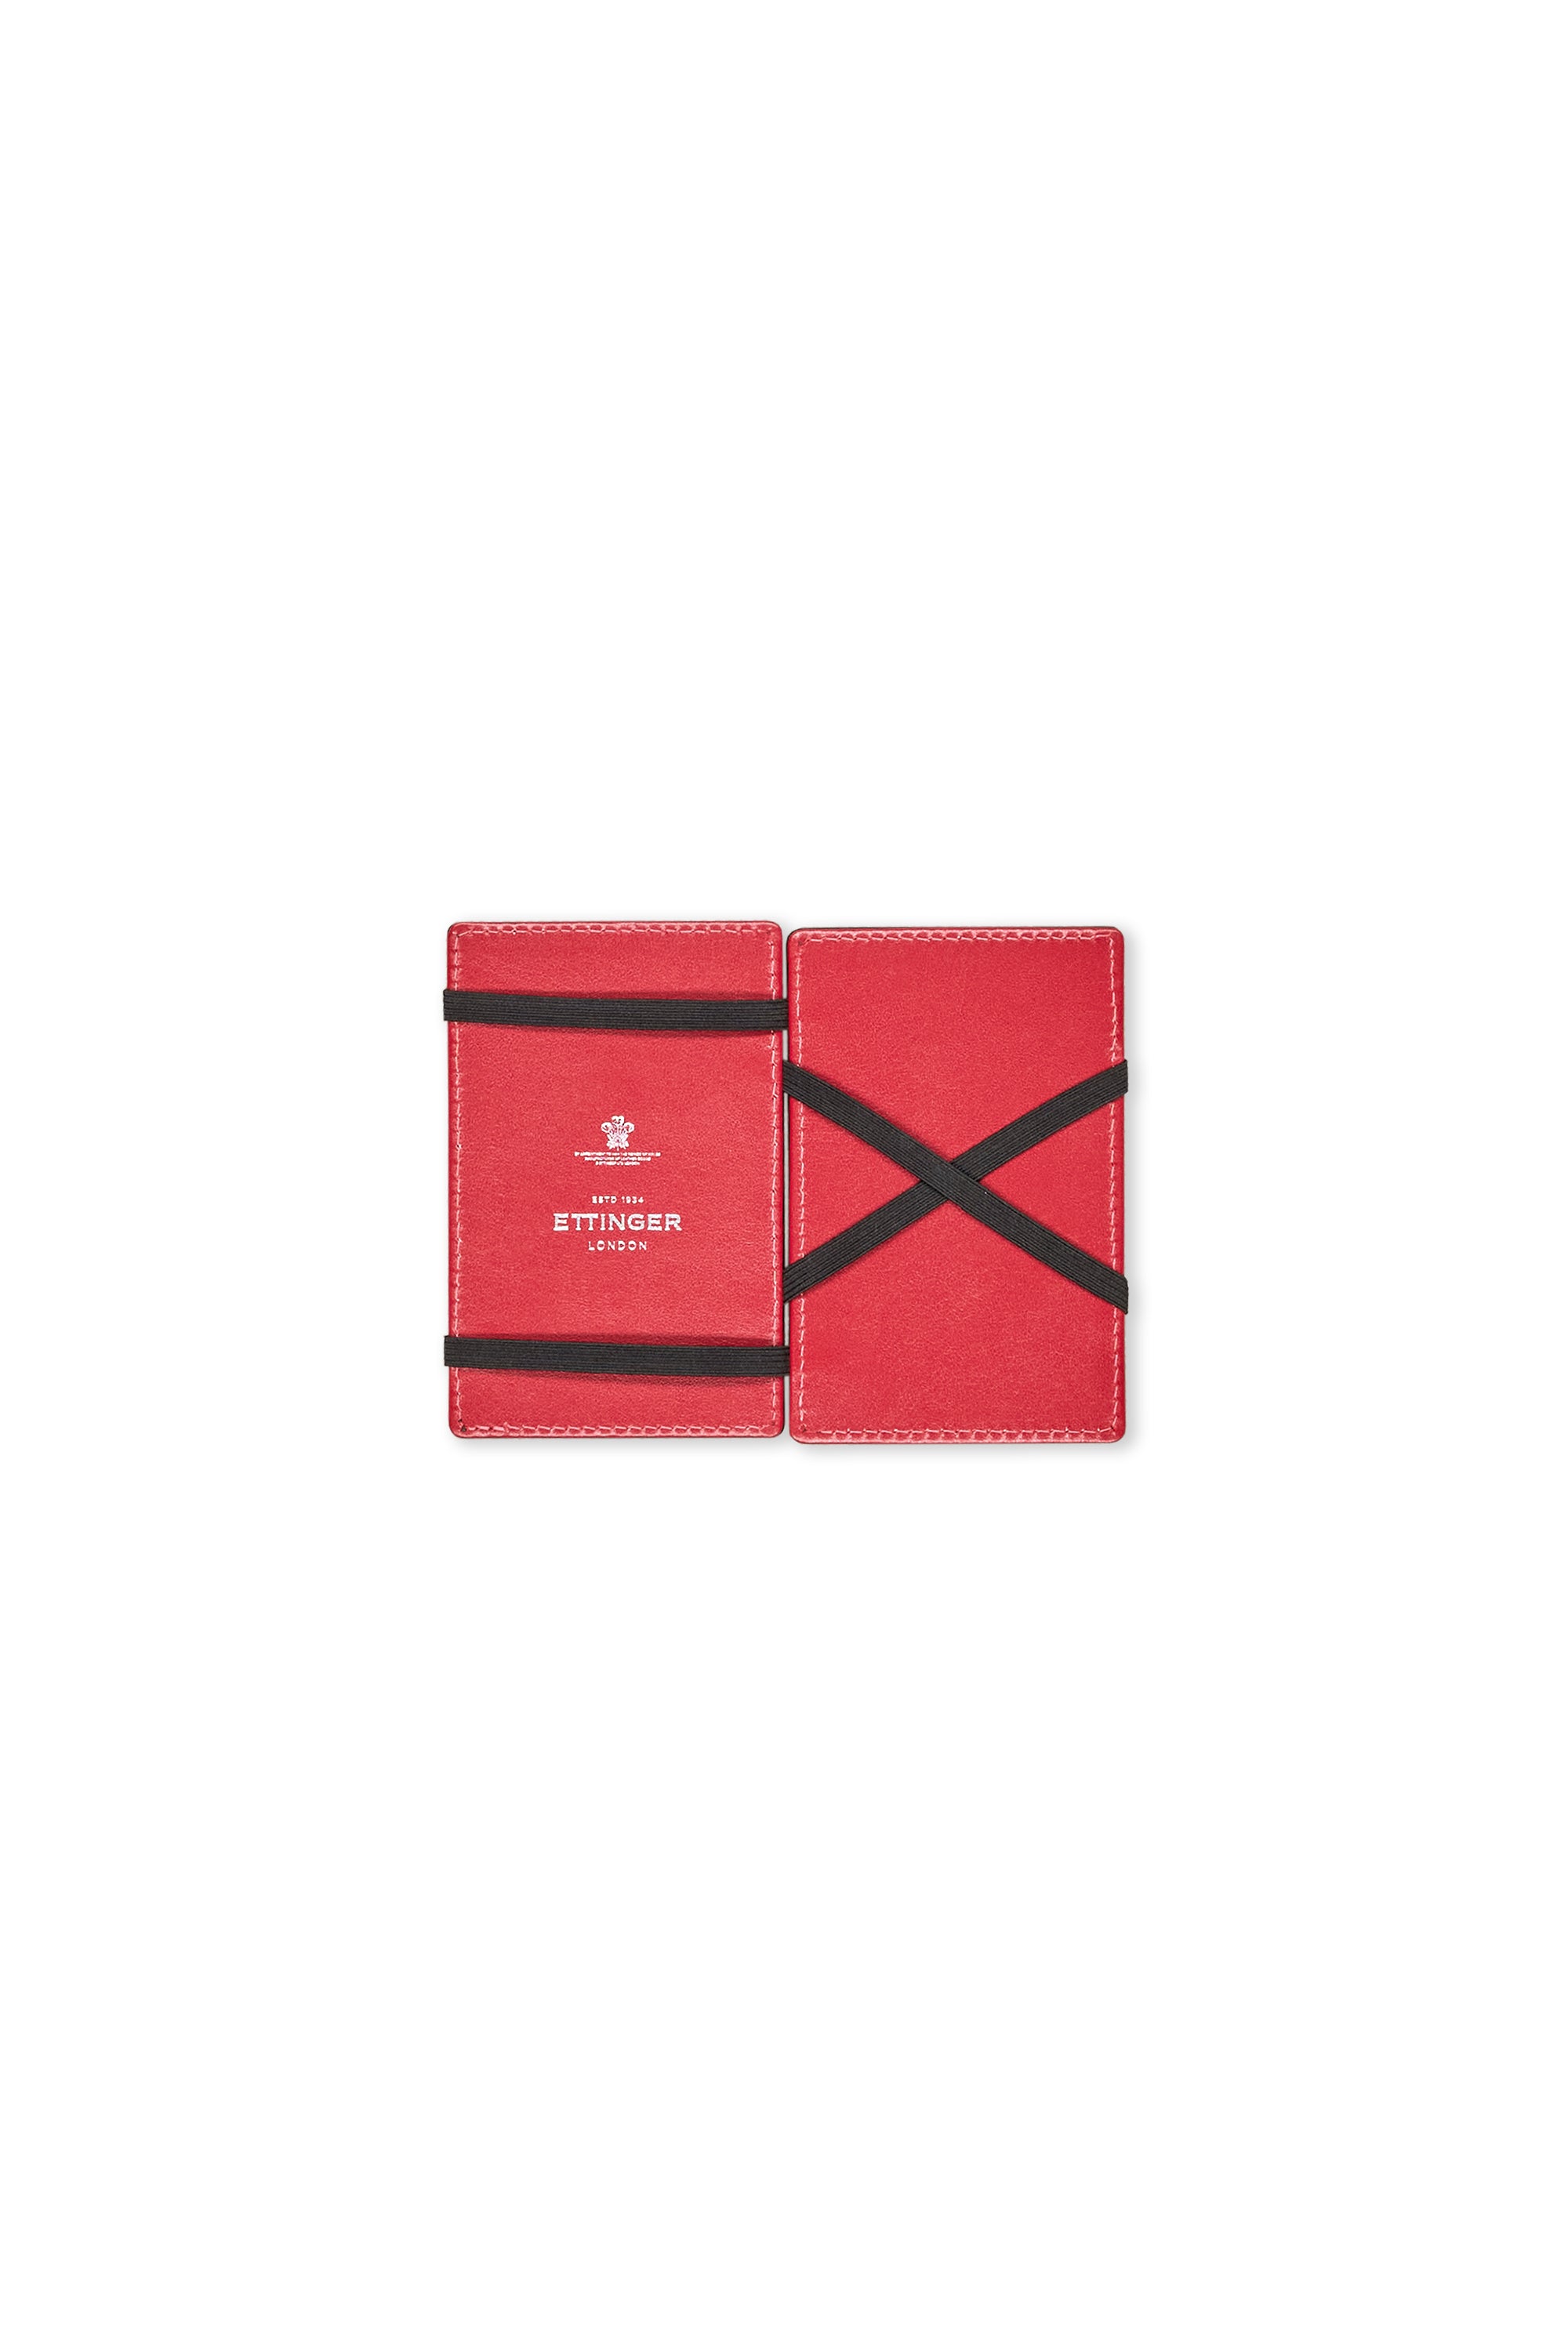 Ettinger Red ST2015AL Sterling Magic Wallet